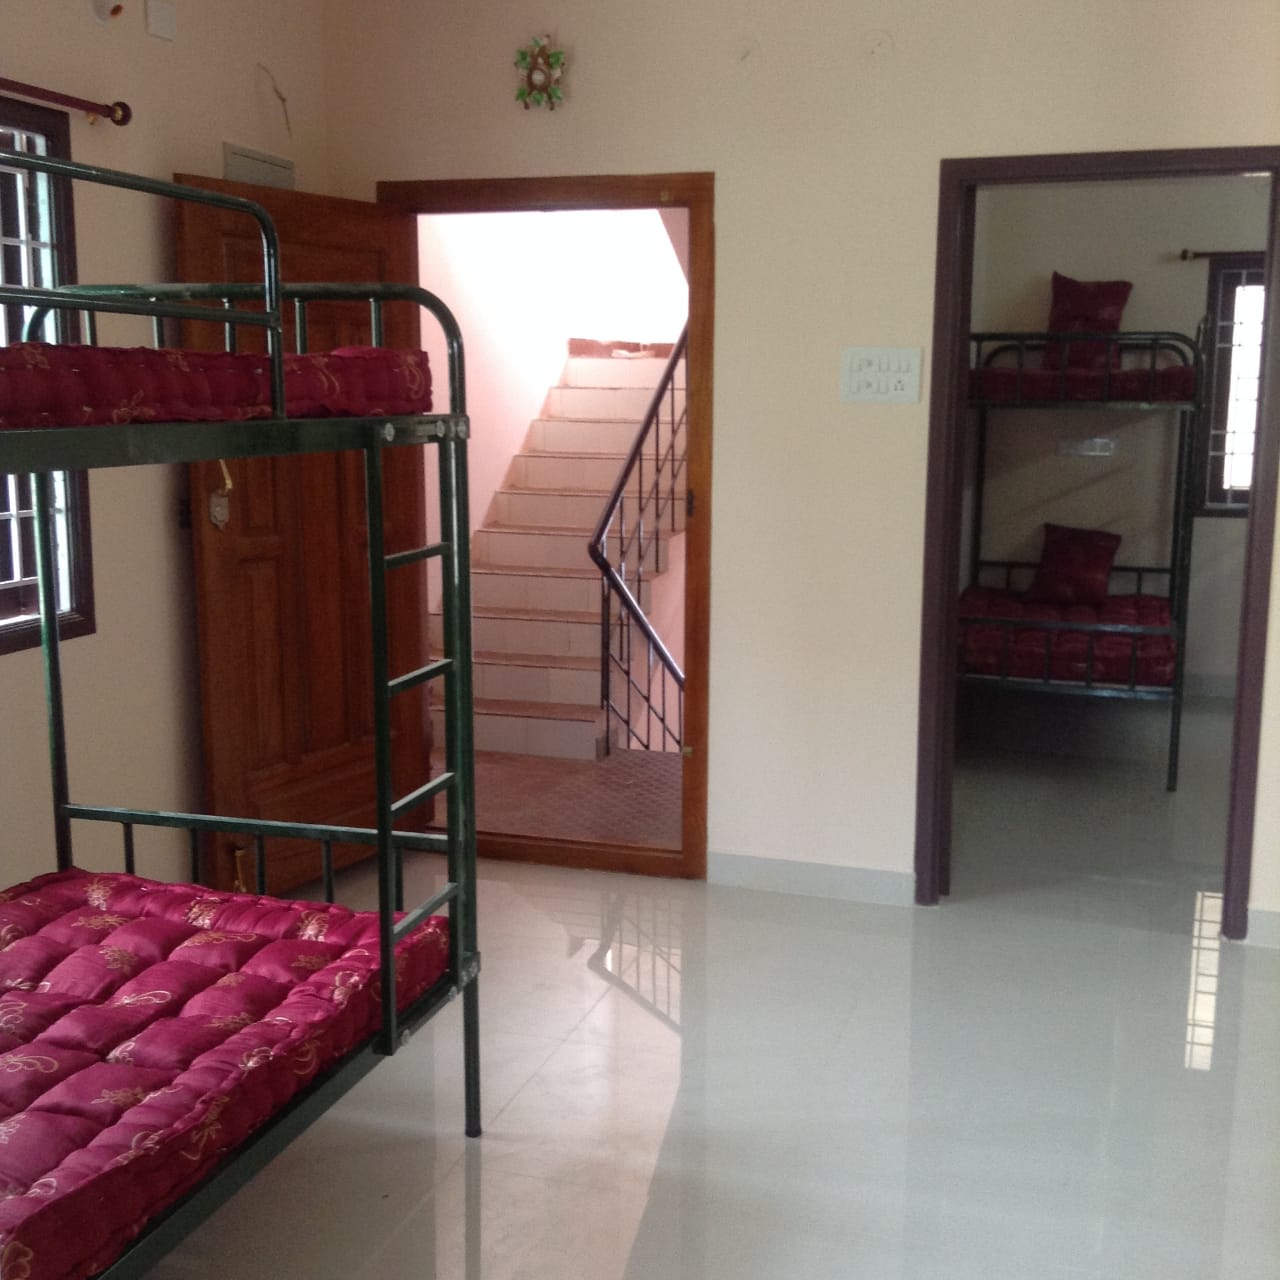 sakthi ladies hostel in adambakkam, chennai-600088 | sulekha chennai